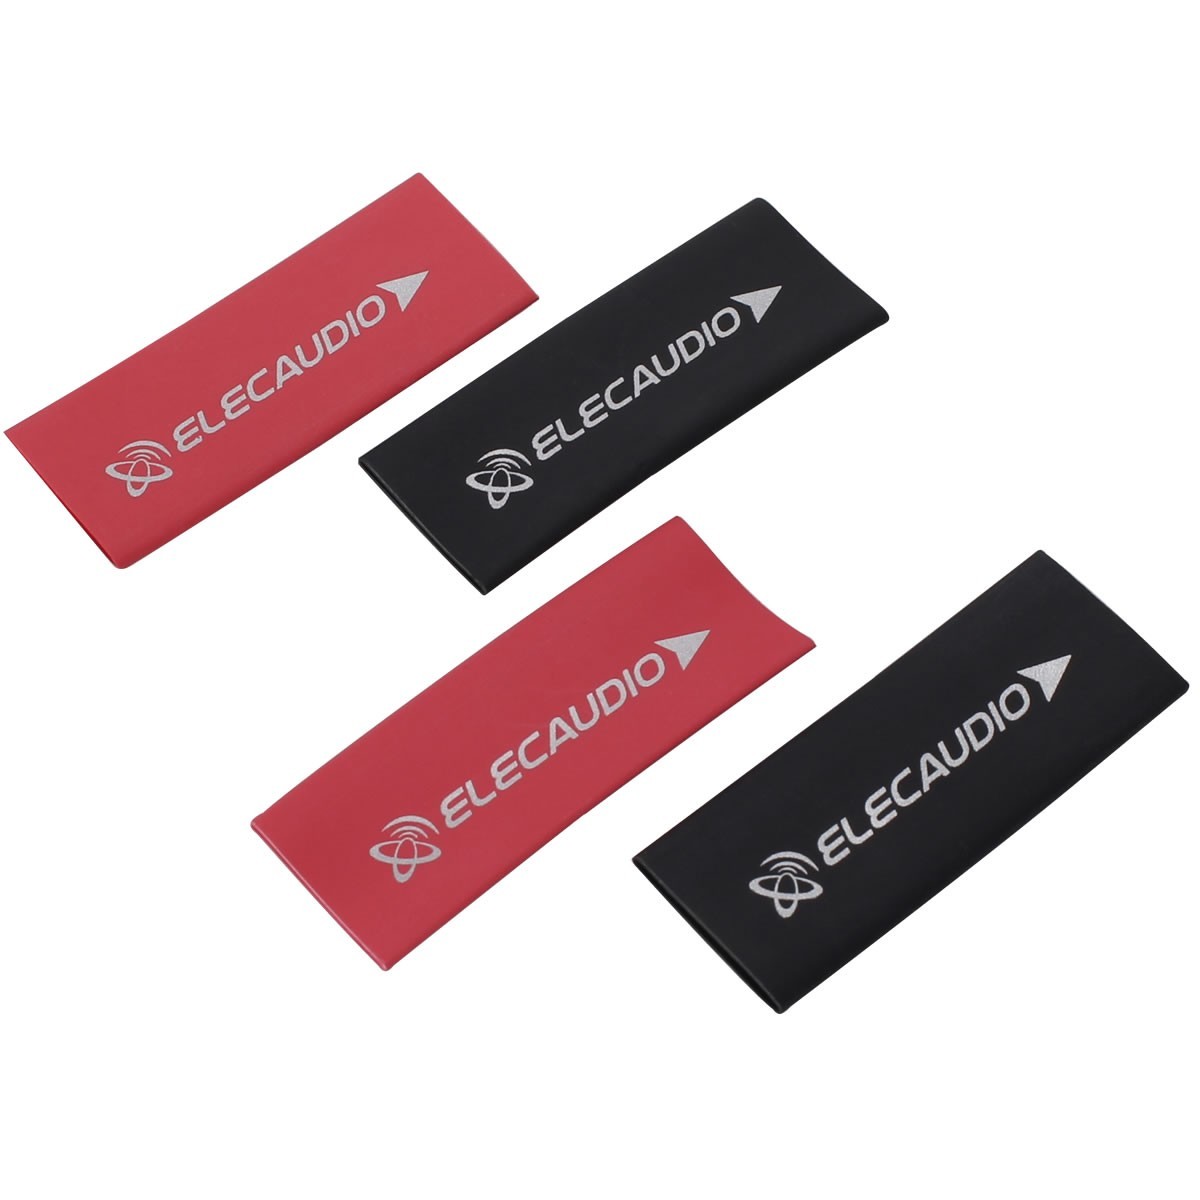 ELECAUDIO Heat-Shrink Tubing 3:1 Ø12mm 20x50mm Red and Black (Set x4)